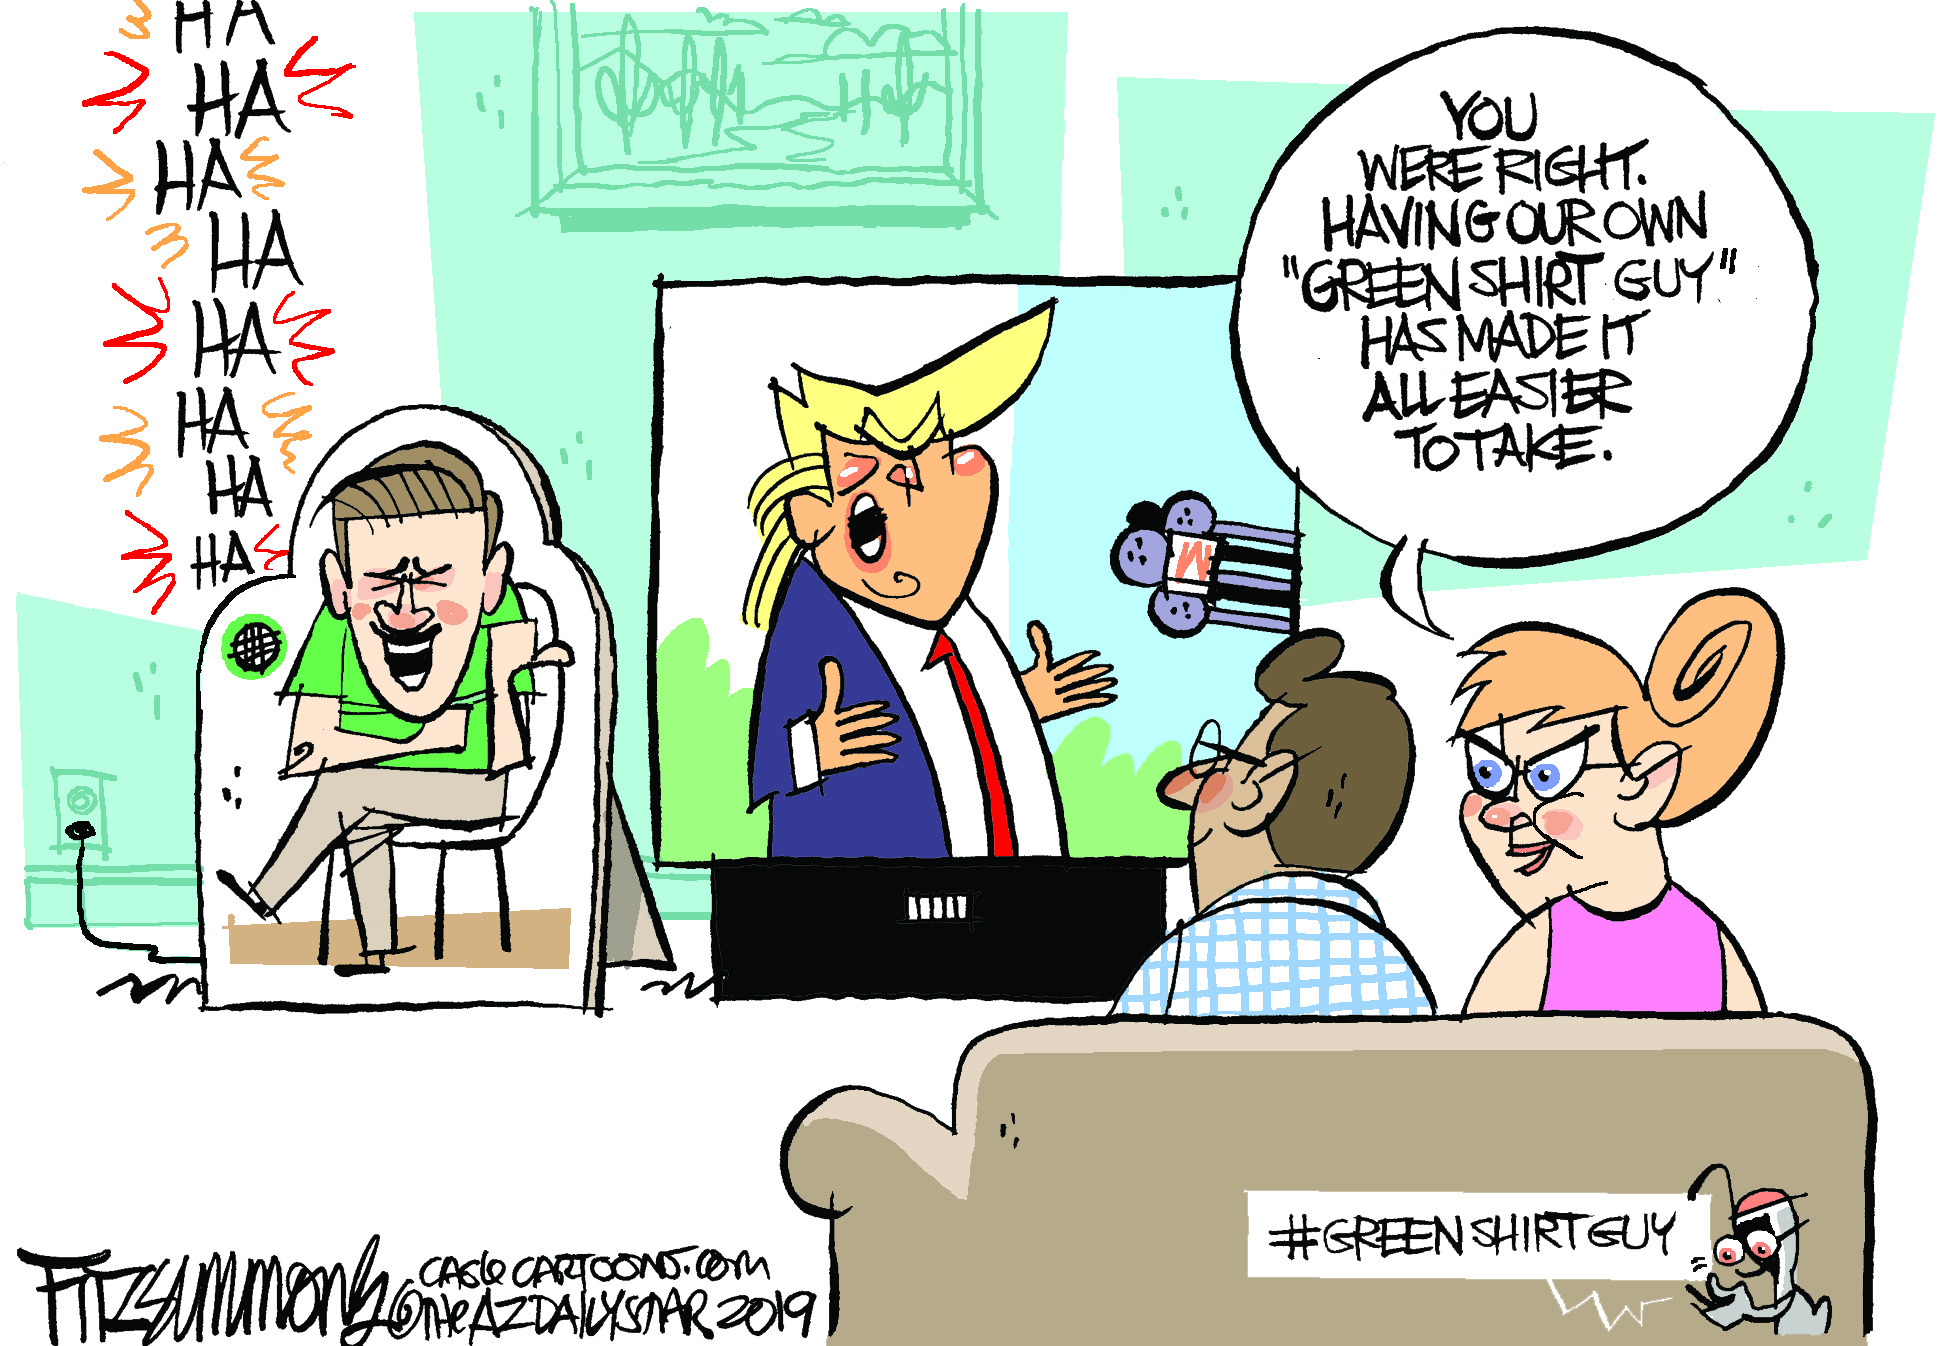 Political Cartoon . Green Shirt Guy Trump Rally Laughing Viral Video